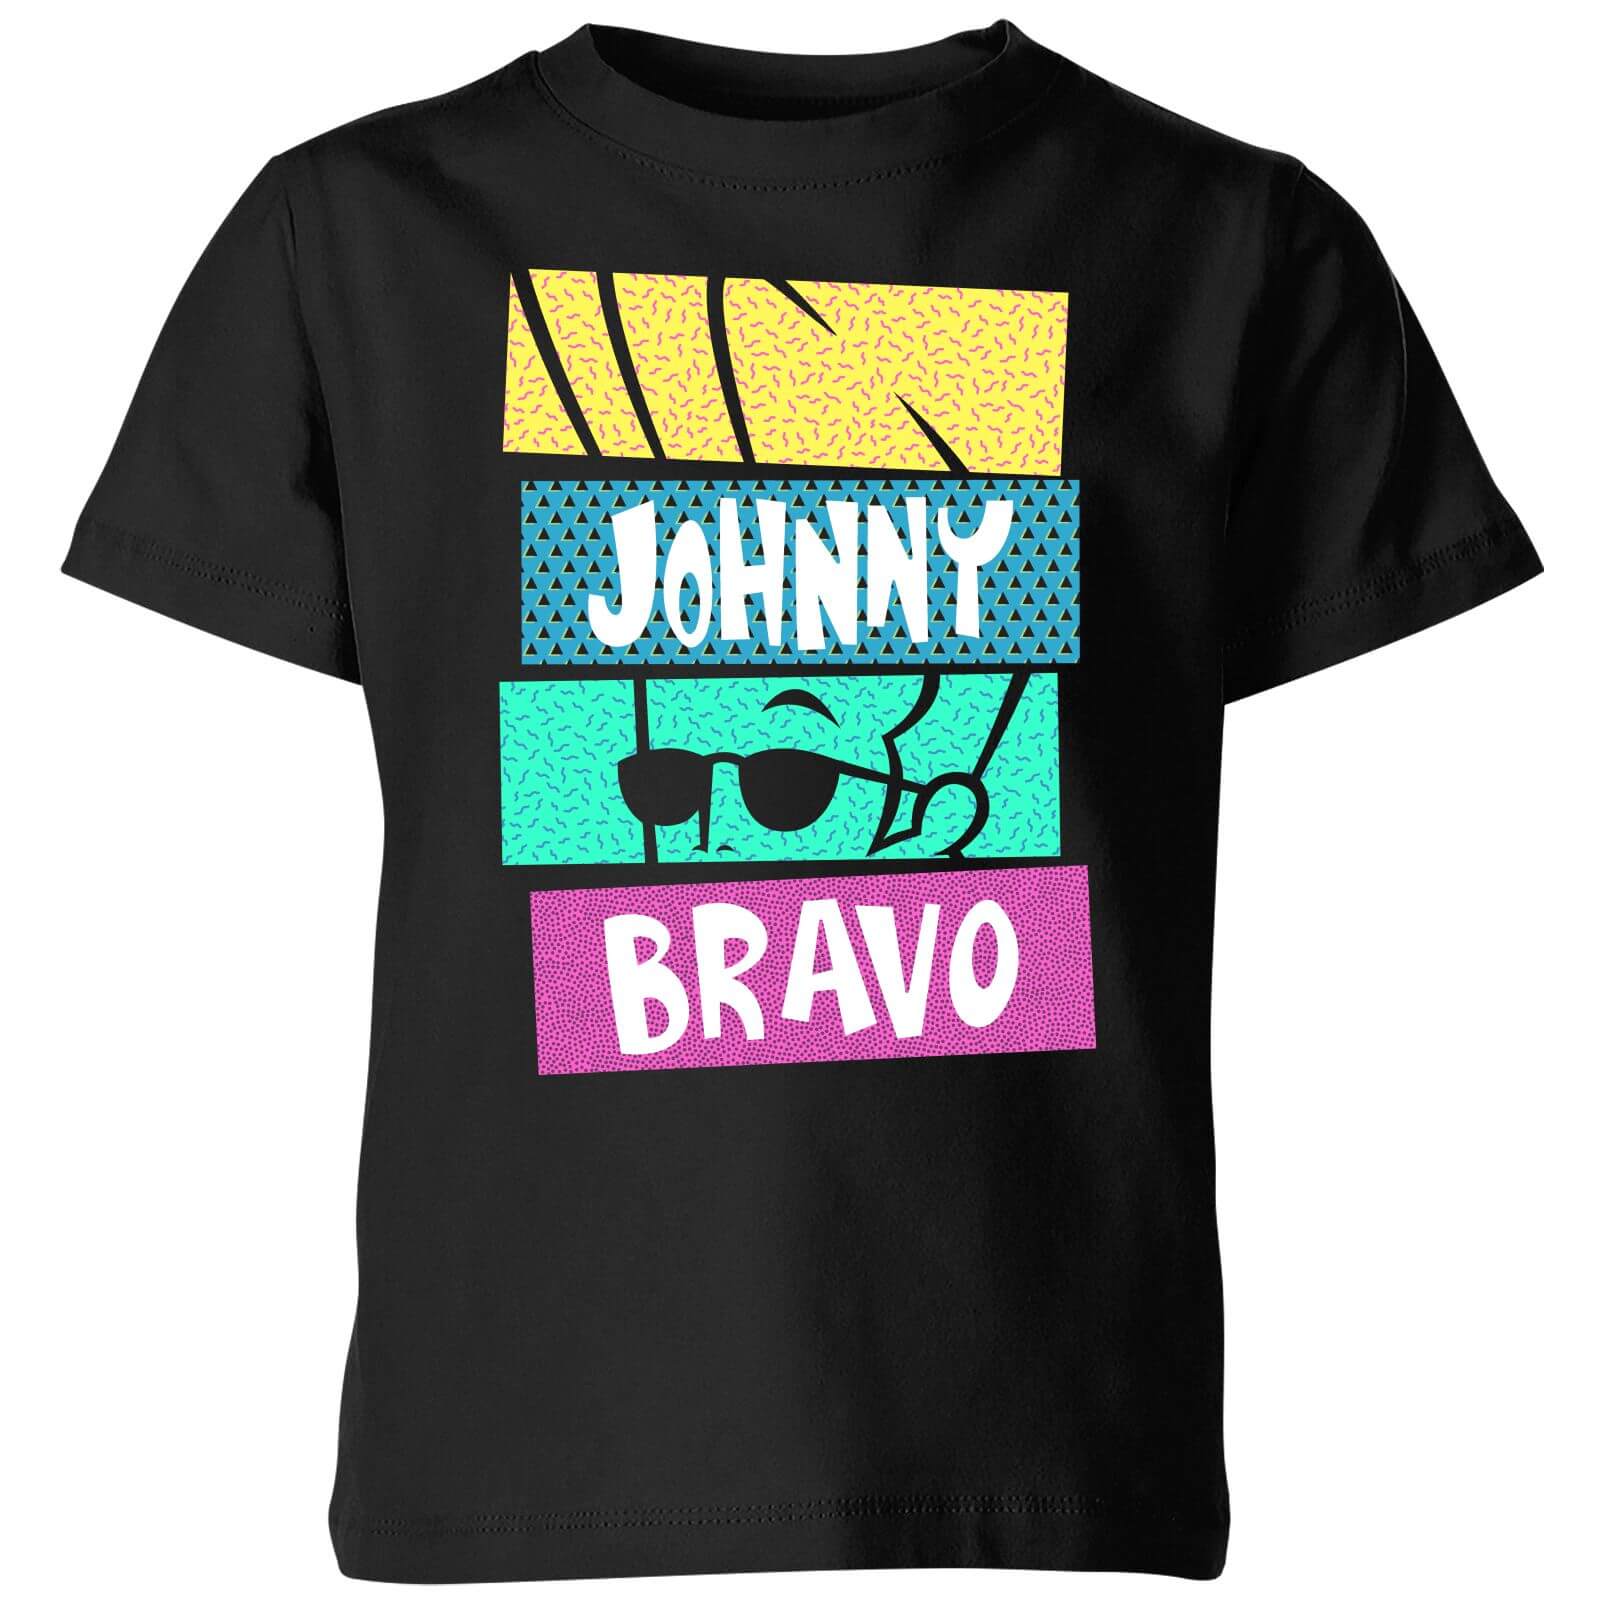 Cartoon Network Spin-Off Johnny Bravo 90's Slices Kids' T-Shirt - Black - 5-6 Years - Black